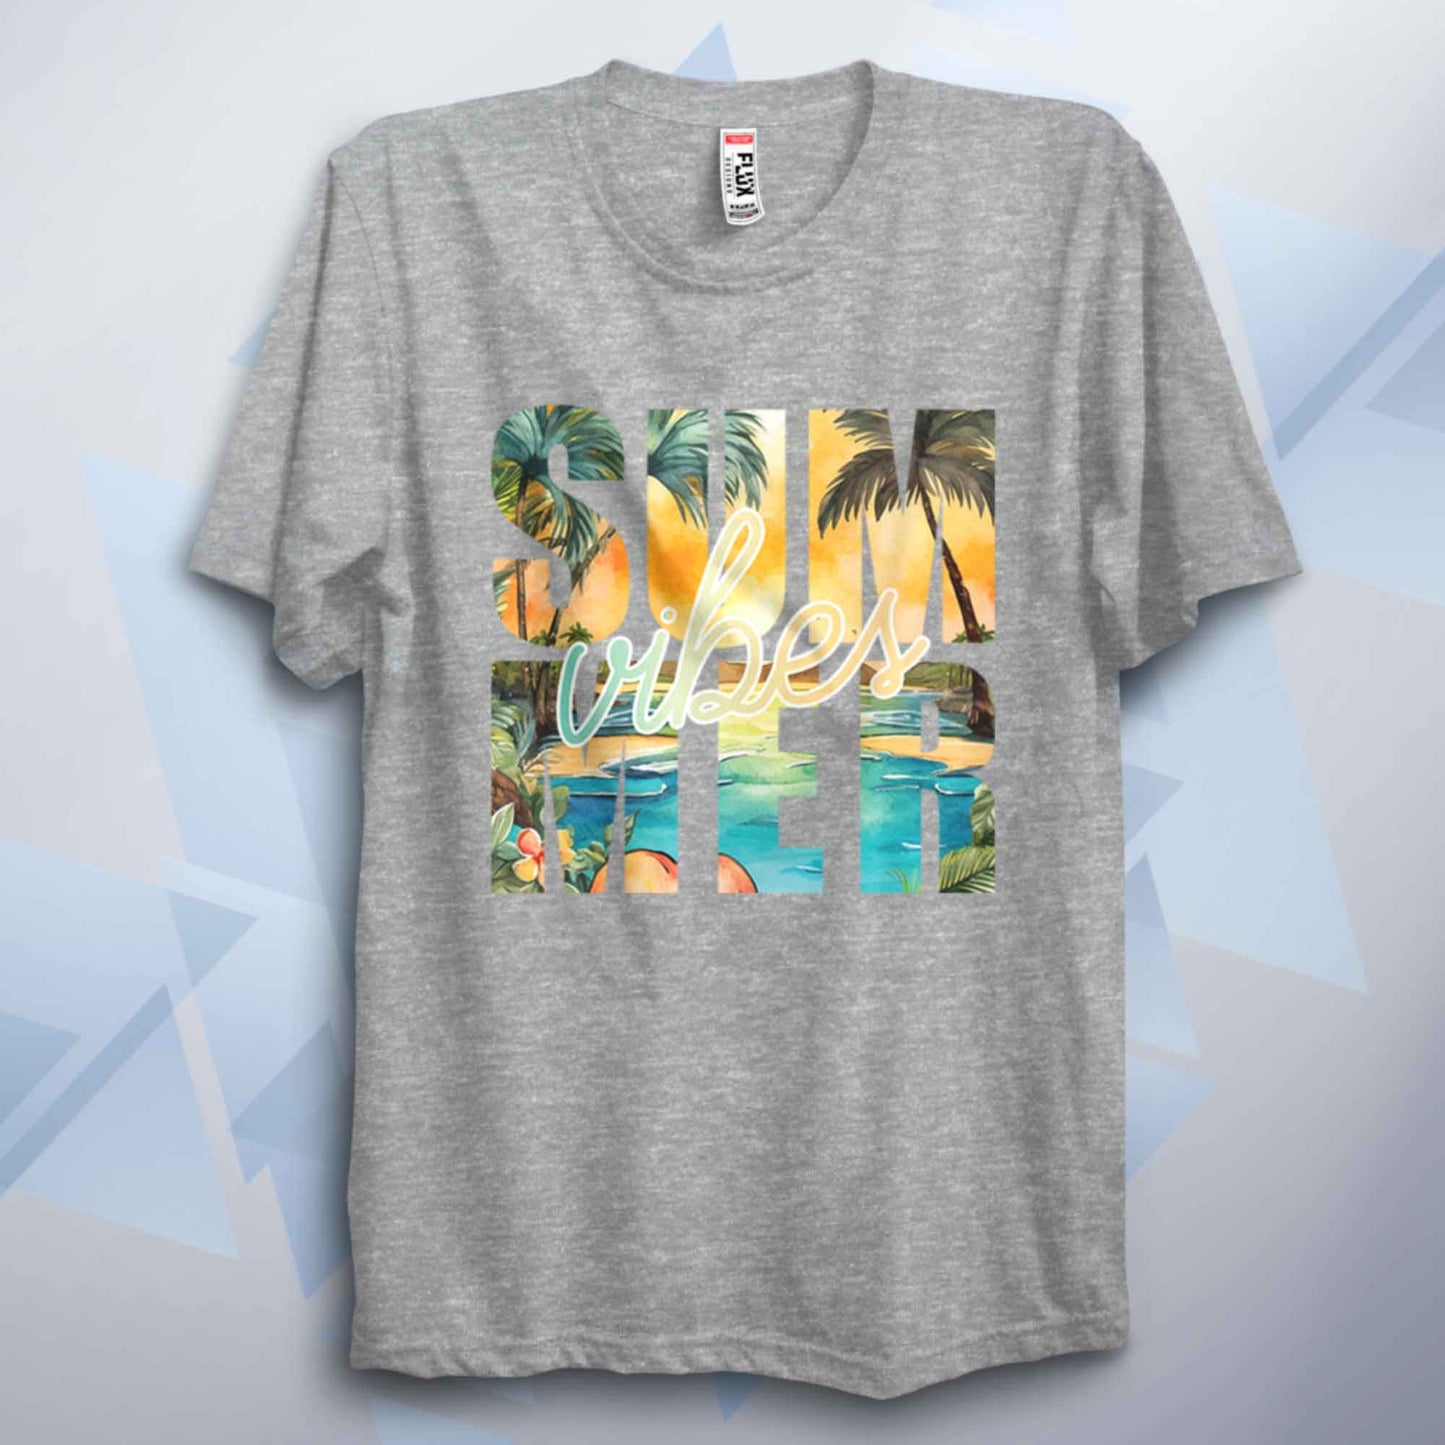 Big Summer Vibes Unisex Adult T Shirt